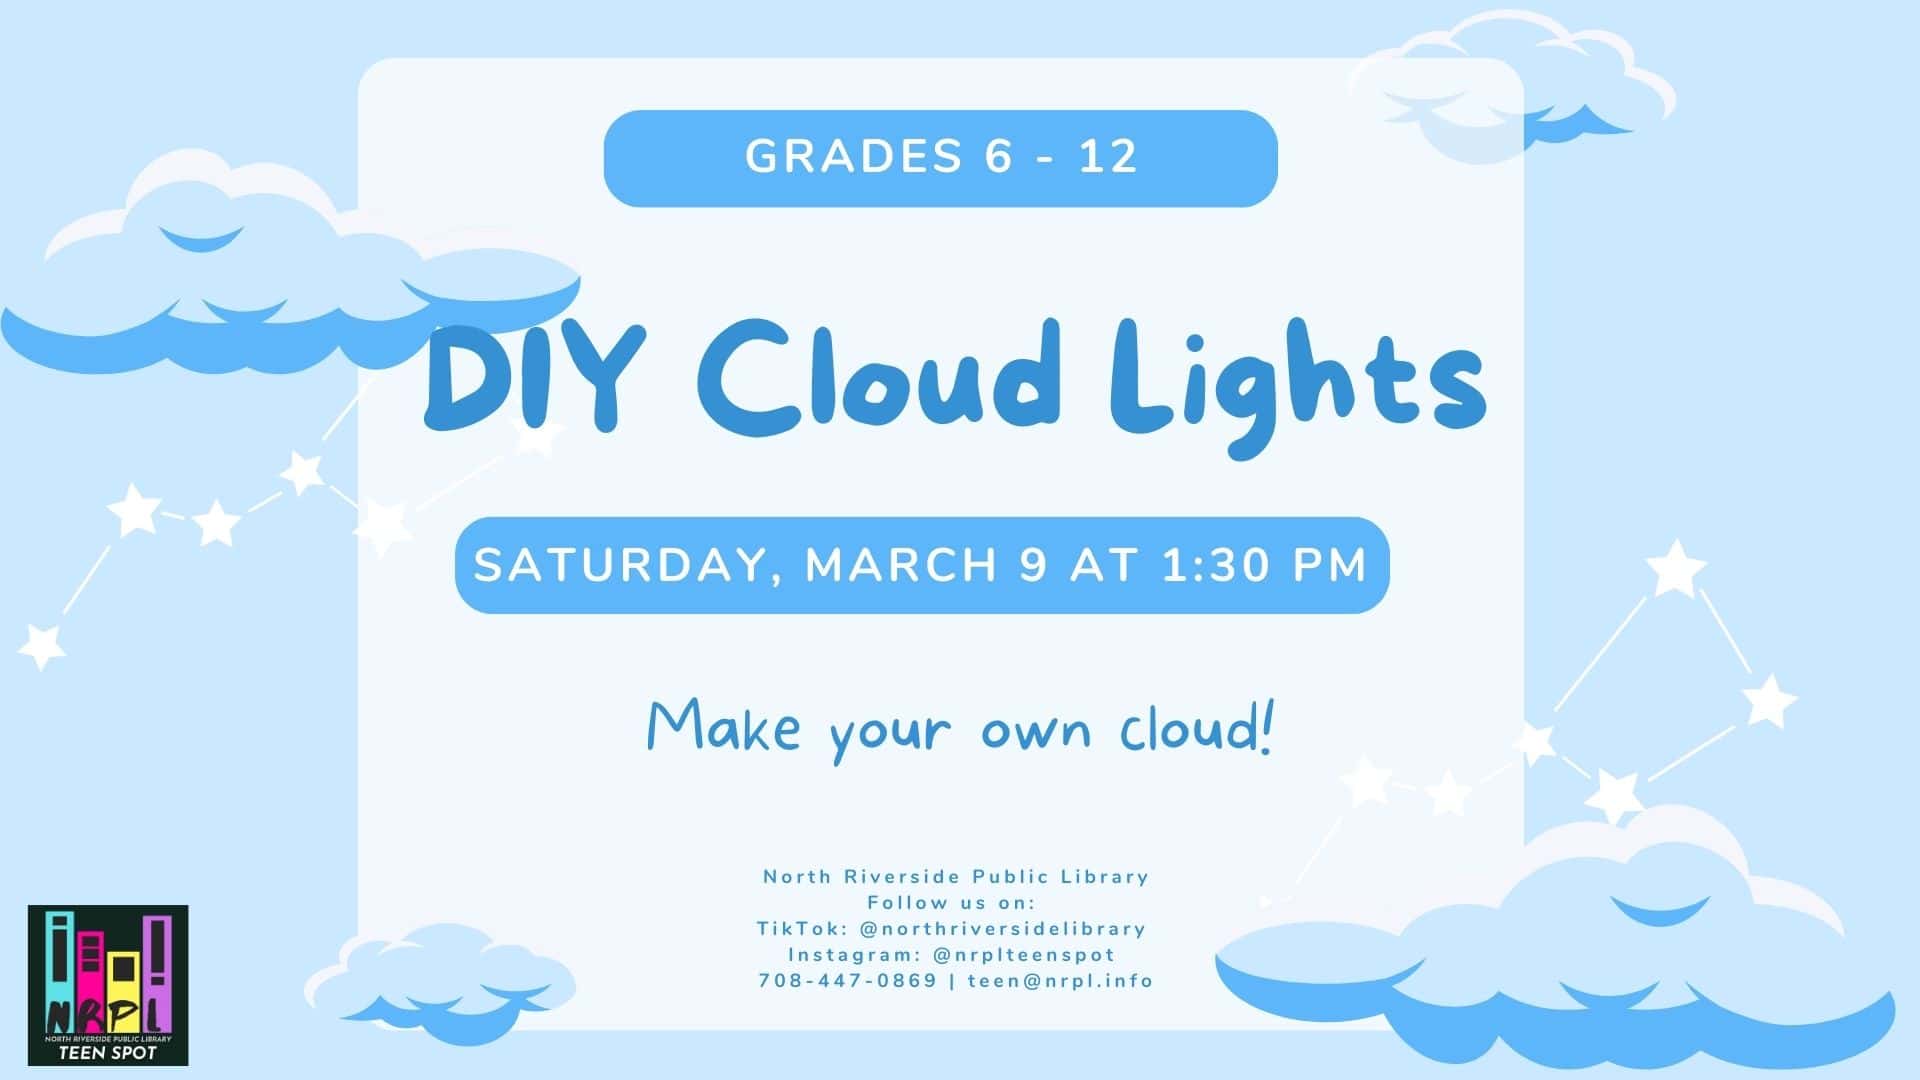 DIY Cloud Lights program for teens